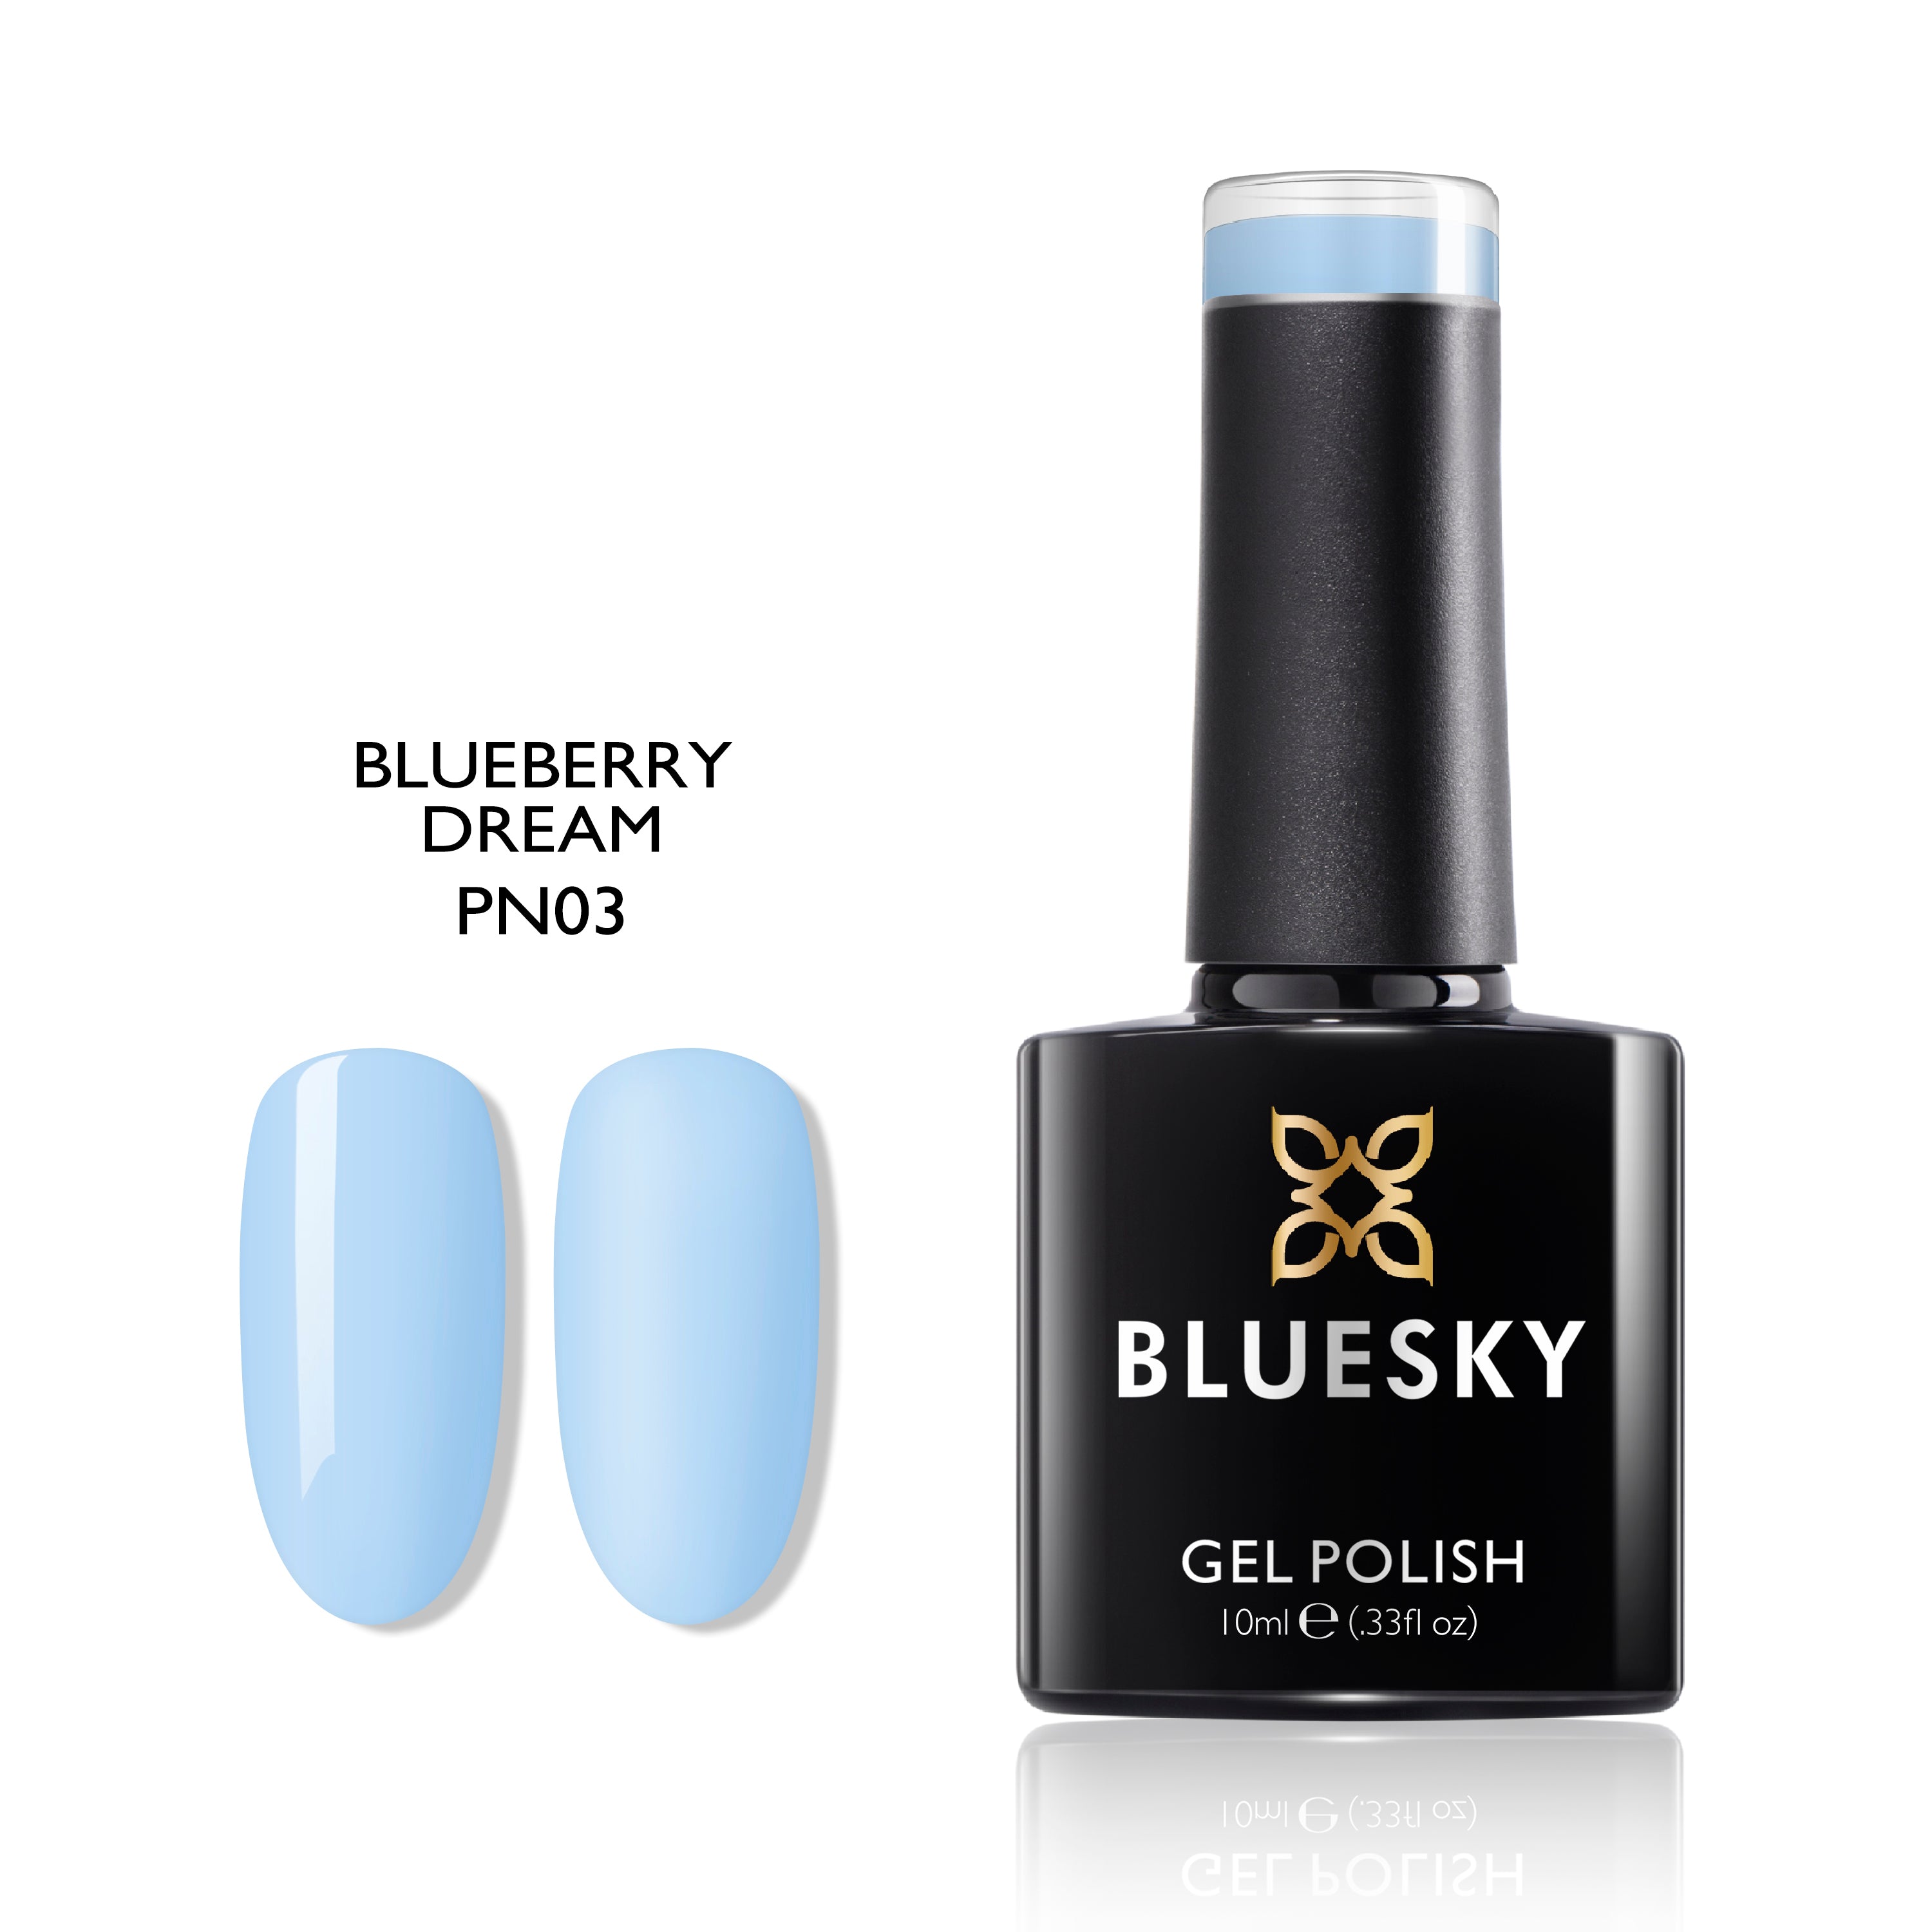 Blueberry Dream - BLUESKY